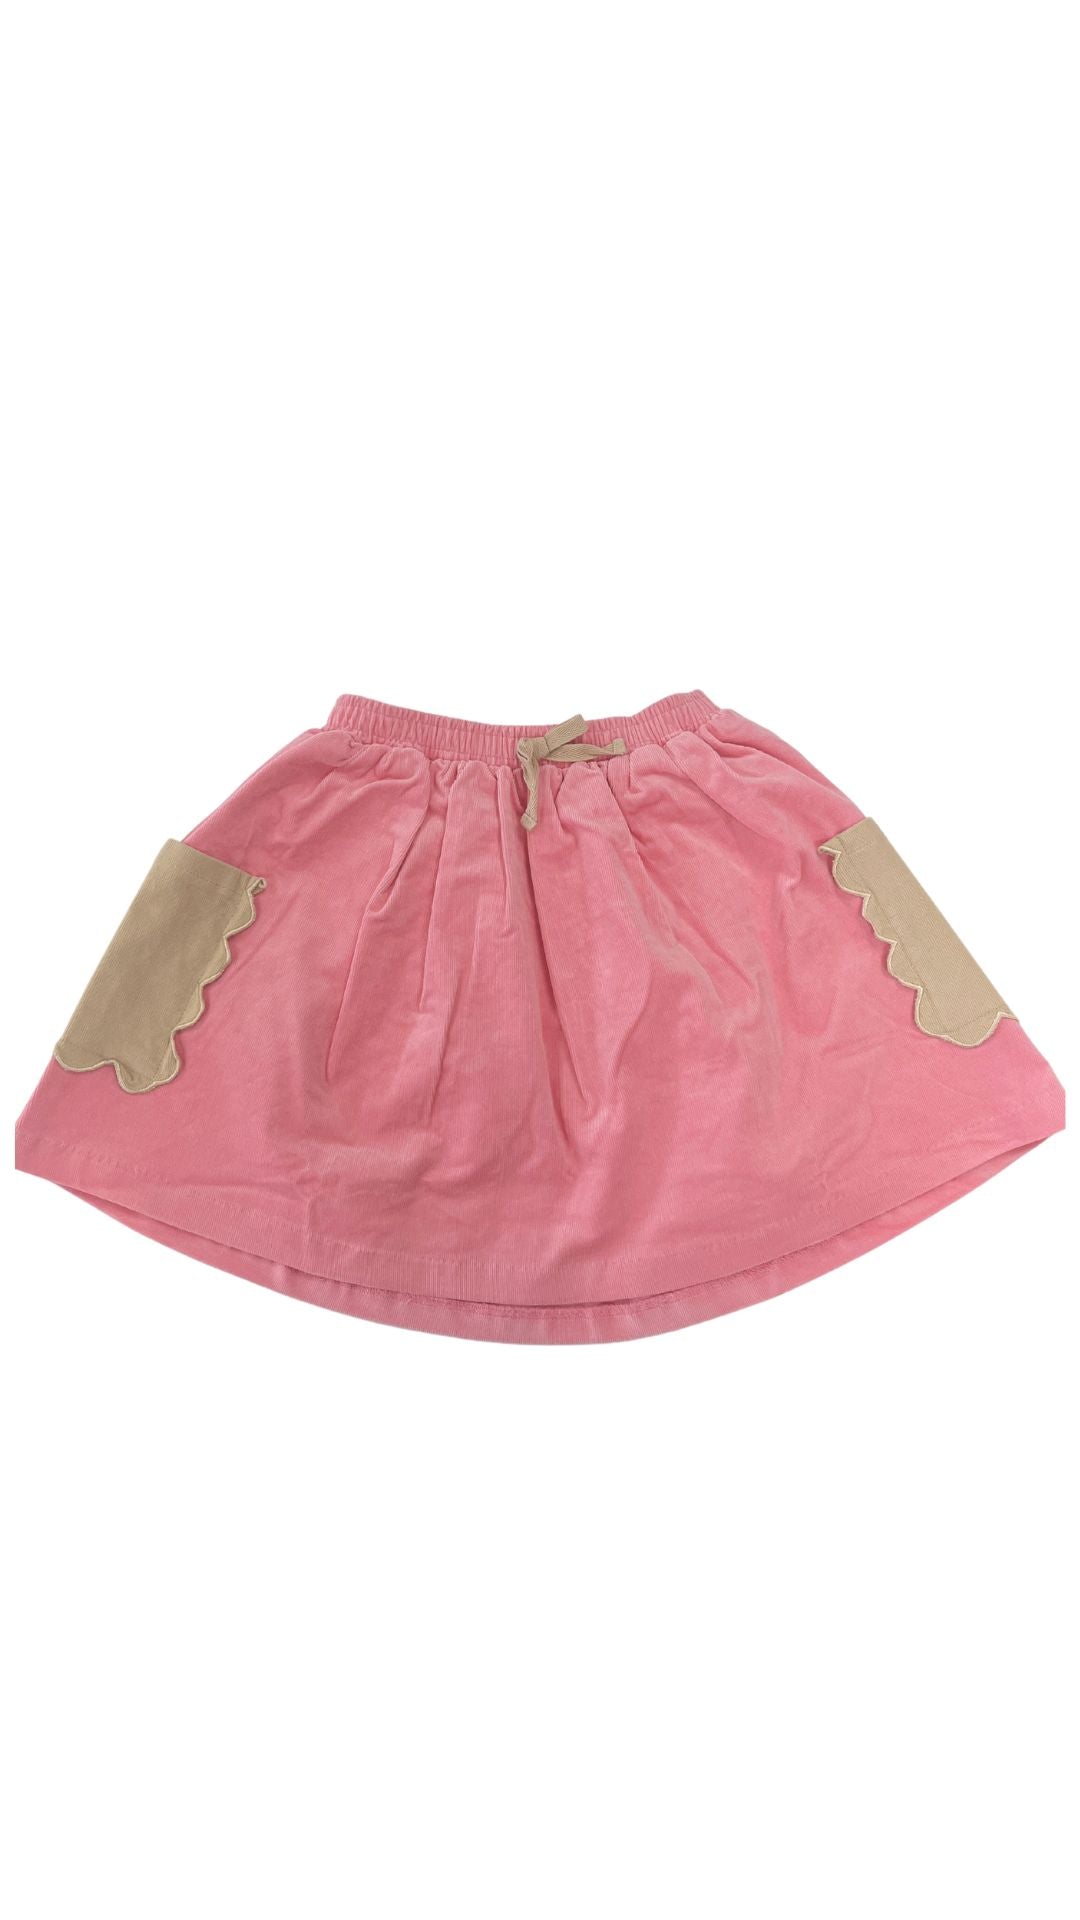 Colorblock Circle Skirt Pink and Cream